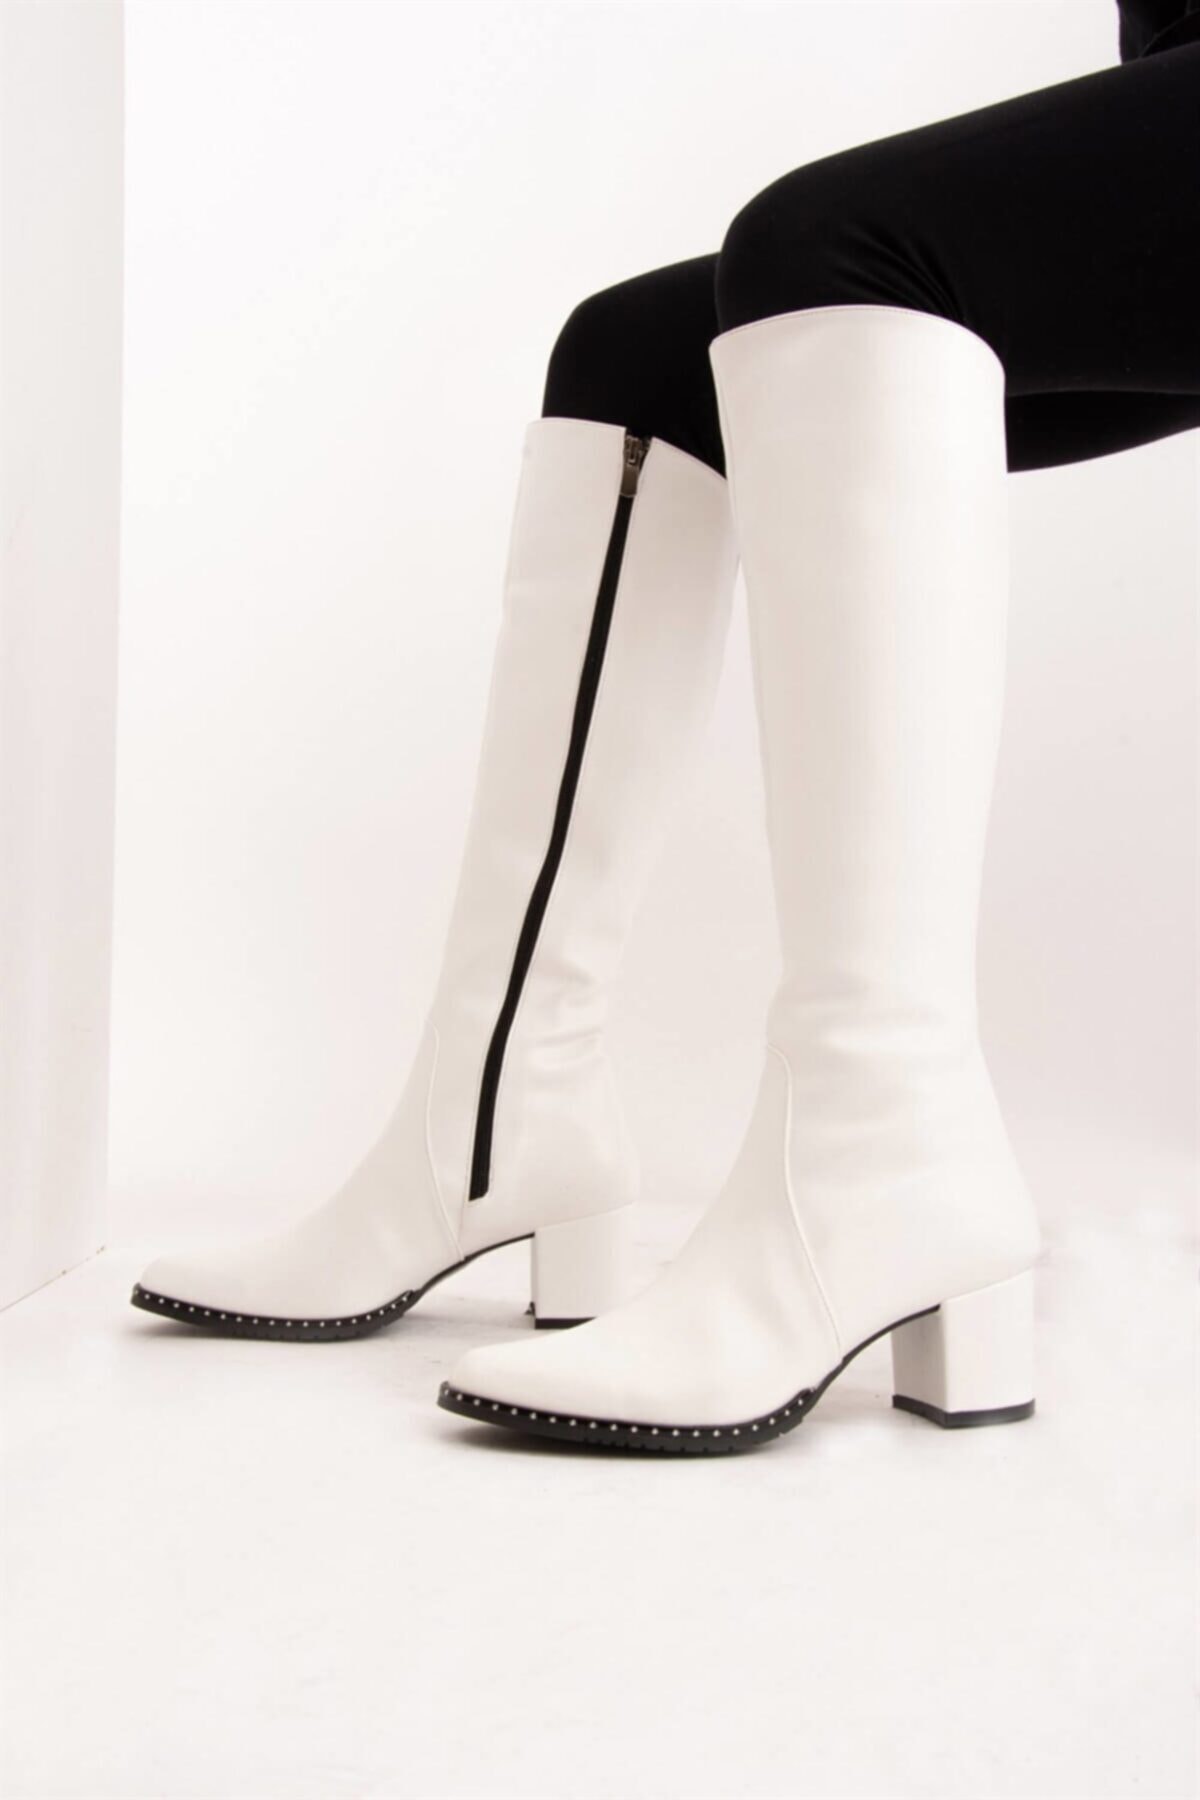 Fox Shoes White Women's Boots